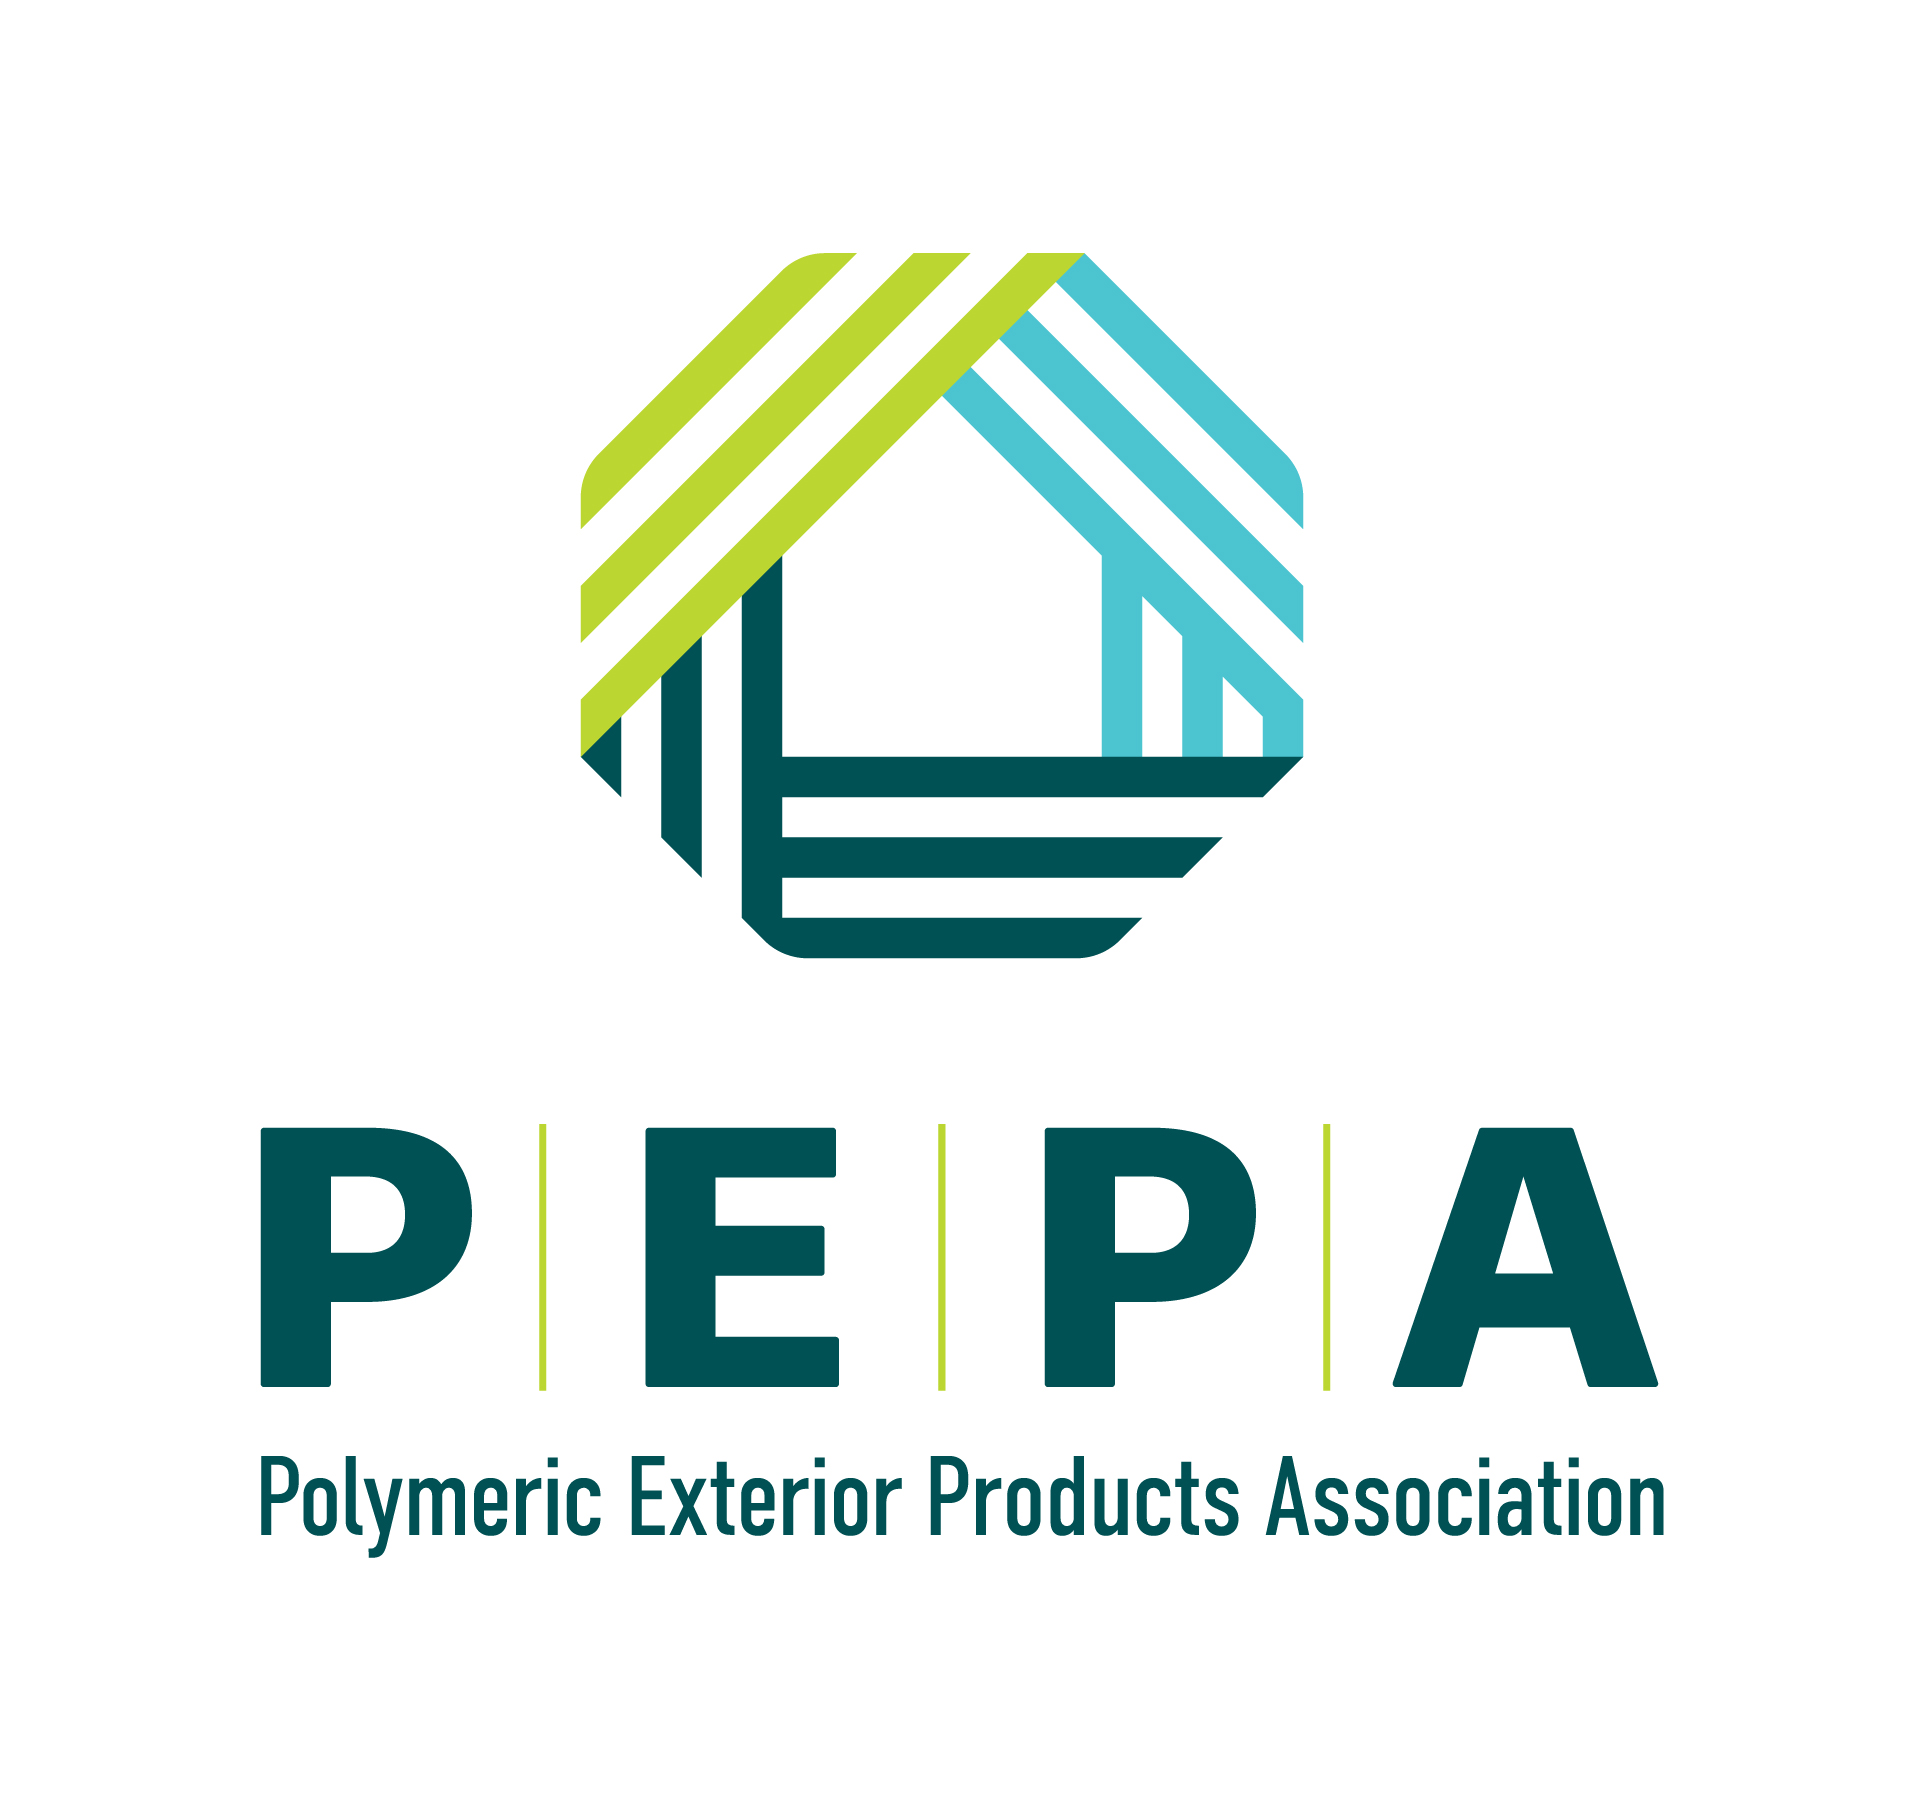 Pepa logo